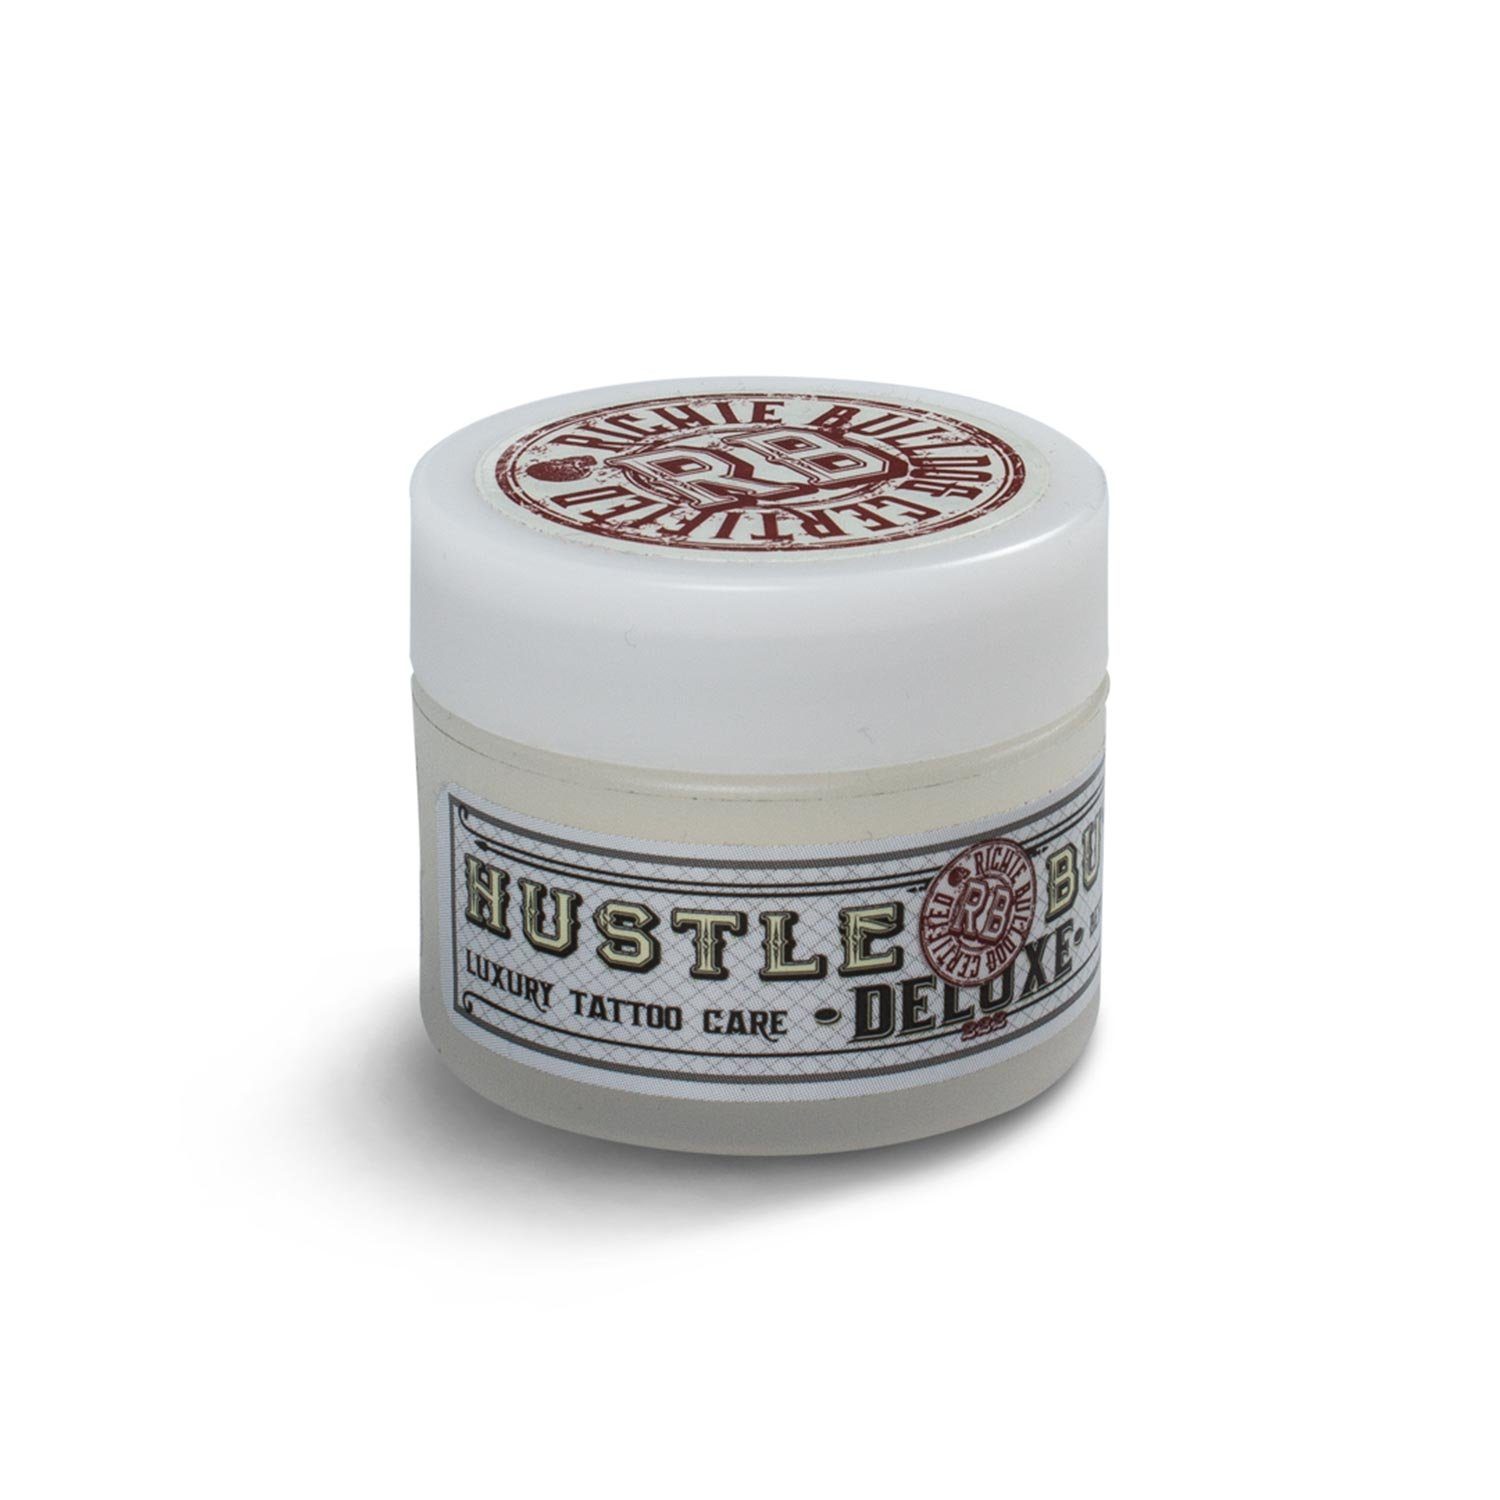 Creme Feuchtigkeitscreme Organic Hustle Tattoo Deluxe Butter